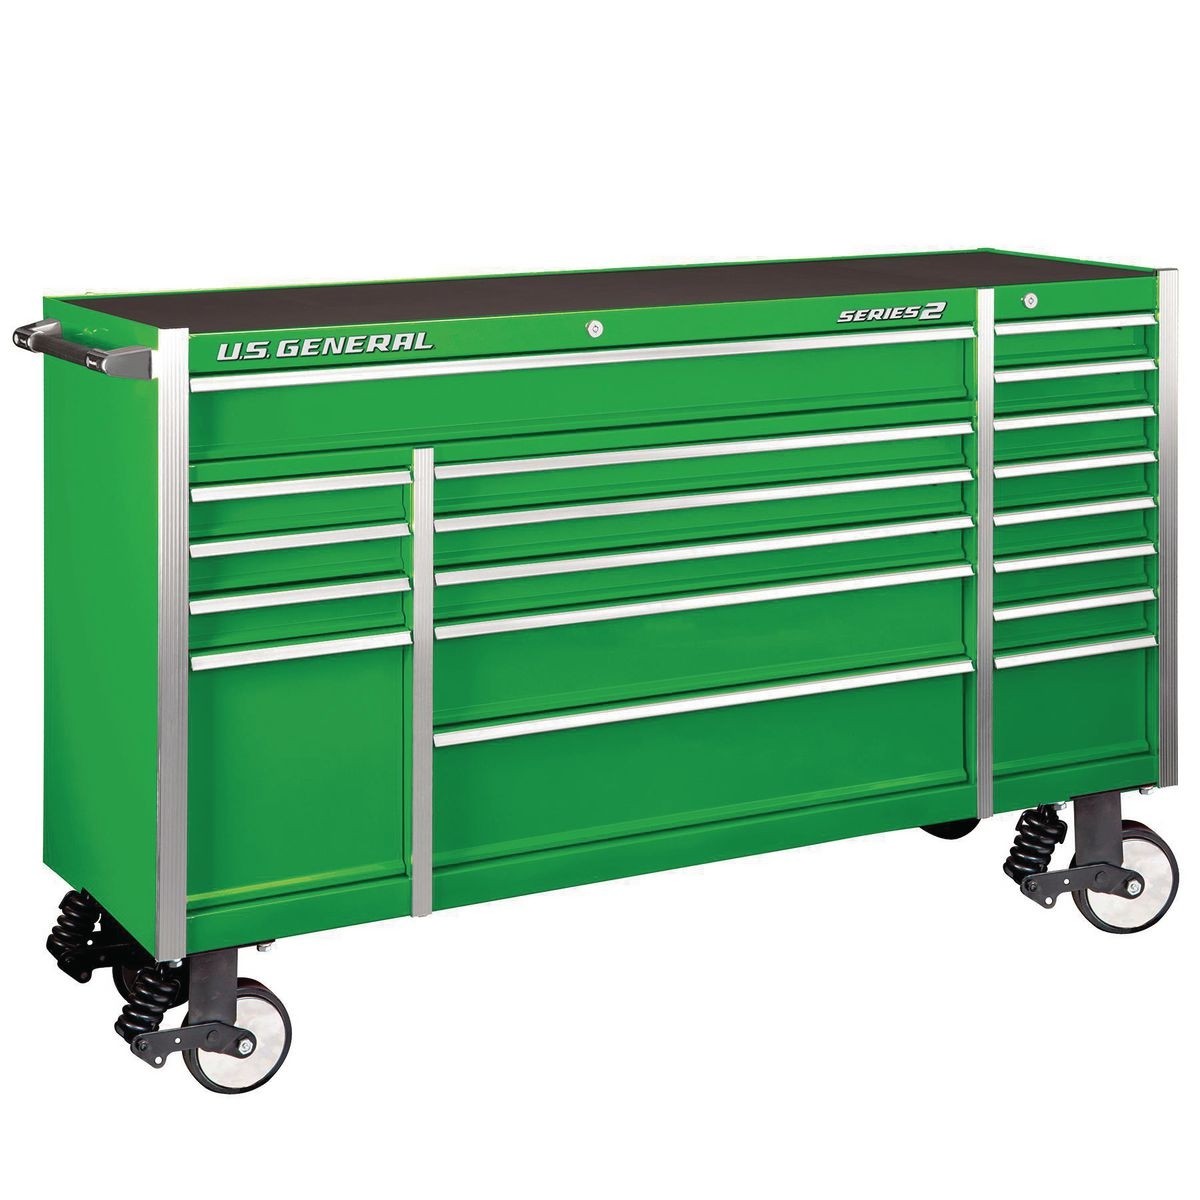 U.S. GENERAL 72 In. X 22 In. Triple Bank Roller Cabinet – Green – Item 56116